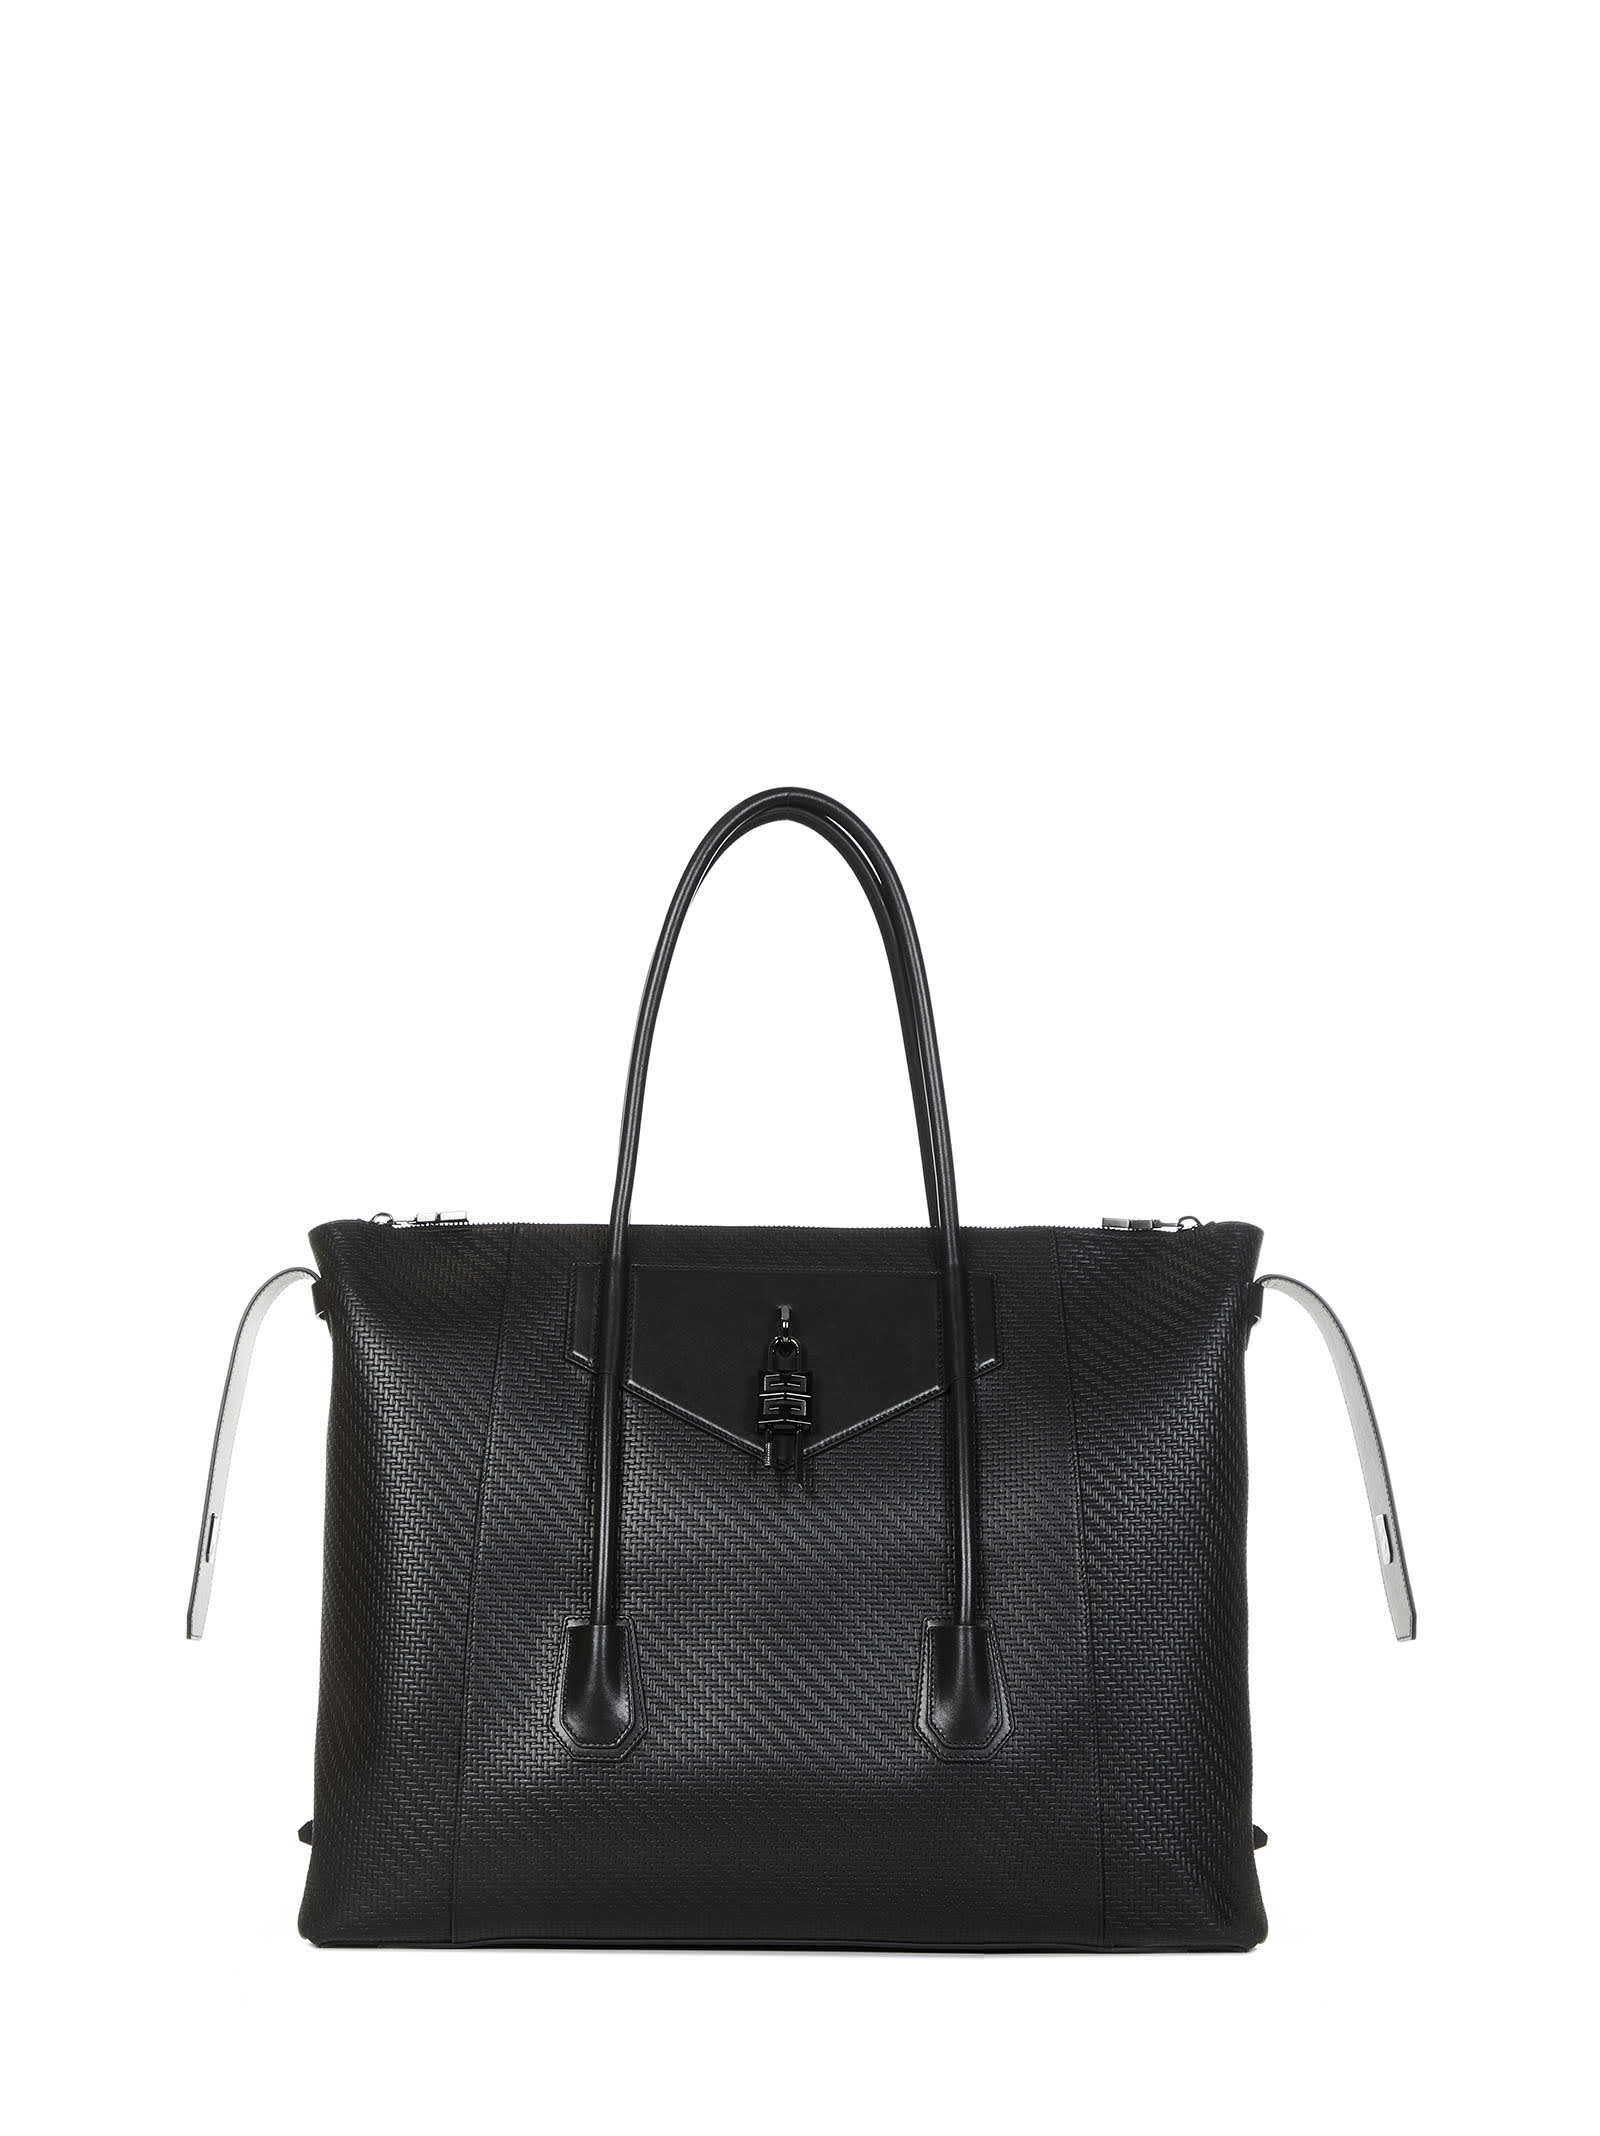 Givenchy Antigona Lock Soft Large Handbag